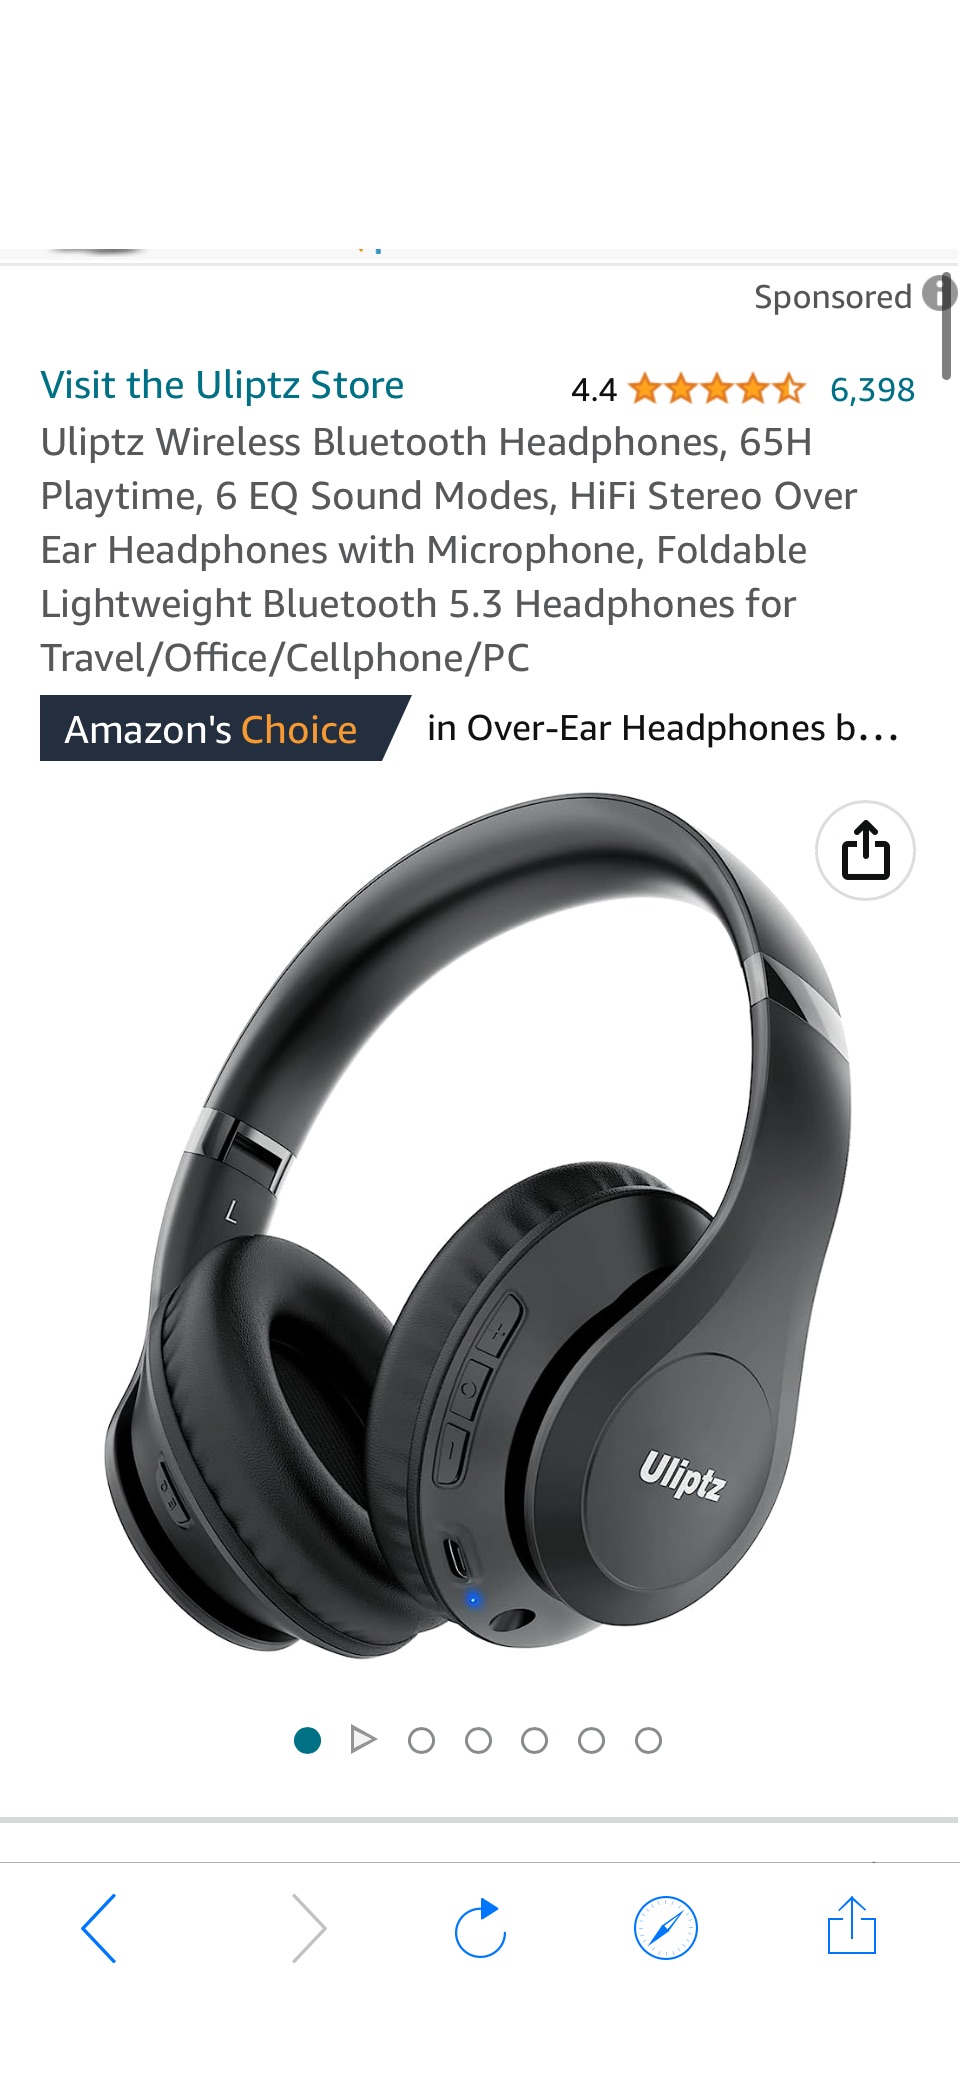 Amazon.com: Uliptz Wireless Bluetooth Headphones, 65H Playtime, 6 EQ Sound Modes, HiFi Stereo Over Ear Headphones with Microphone, Foldable原价26.99